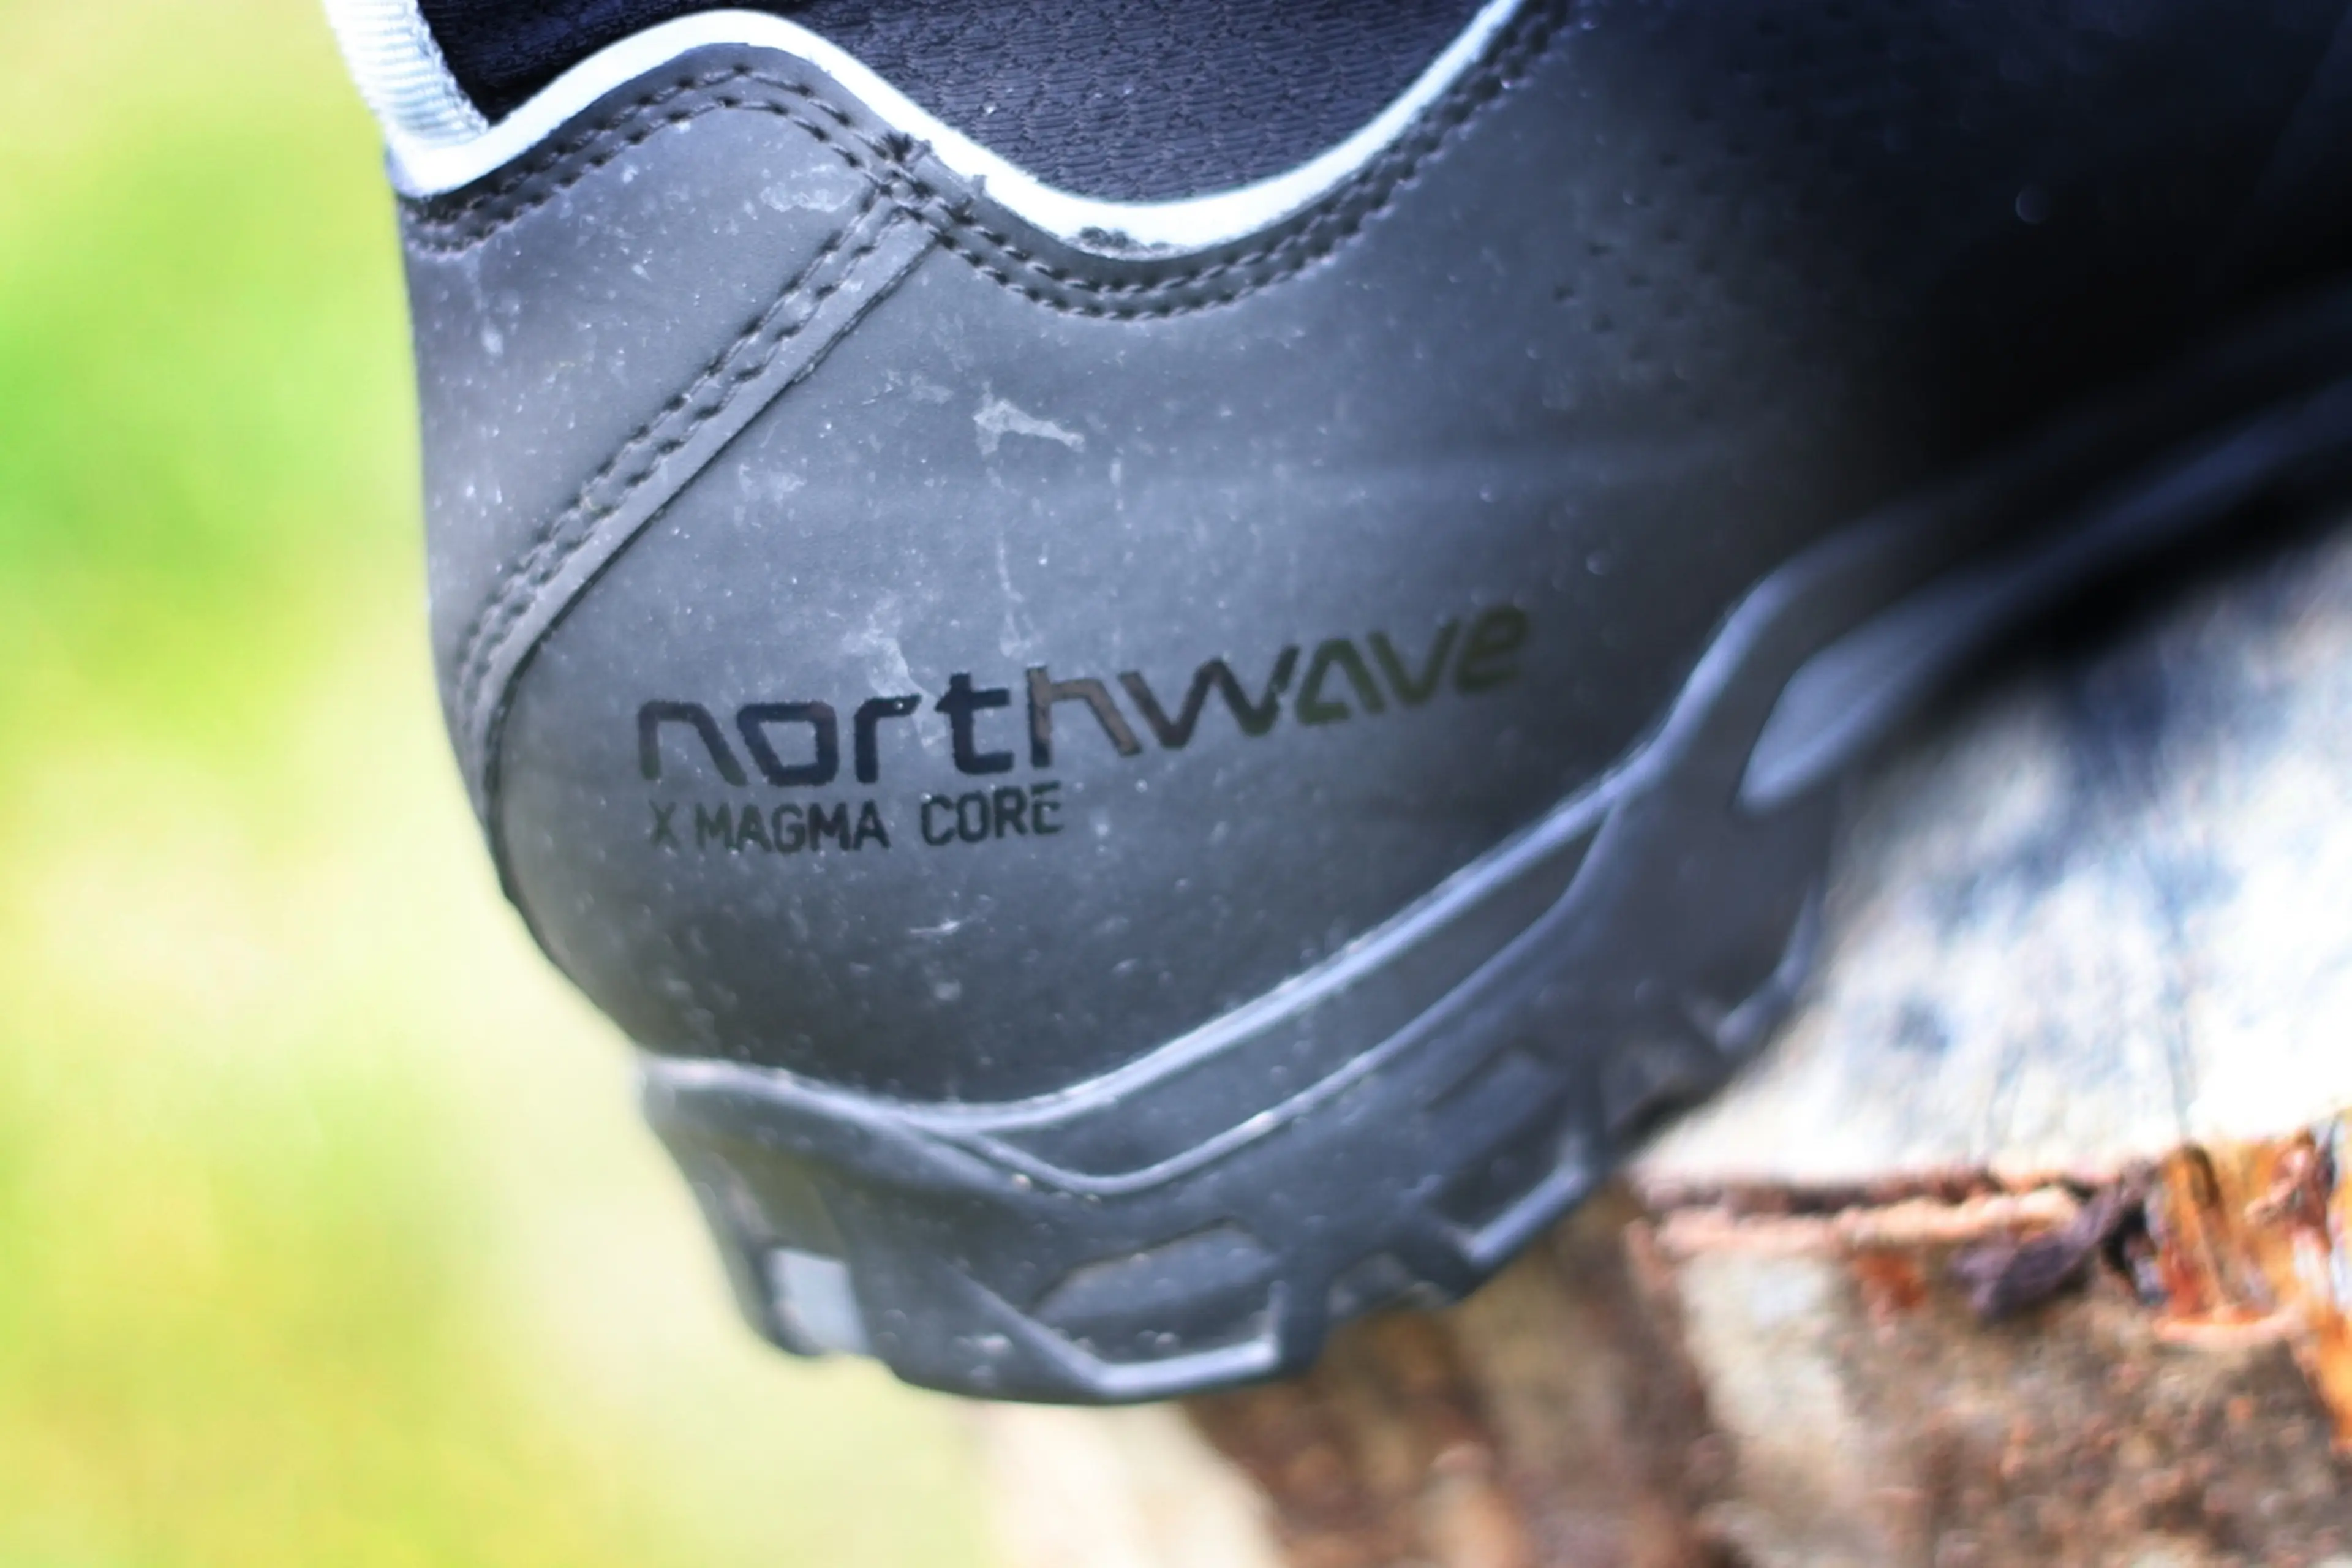 7. Pantofi de iarna ciclism Northwave X-Magma Core